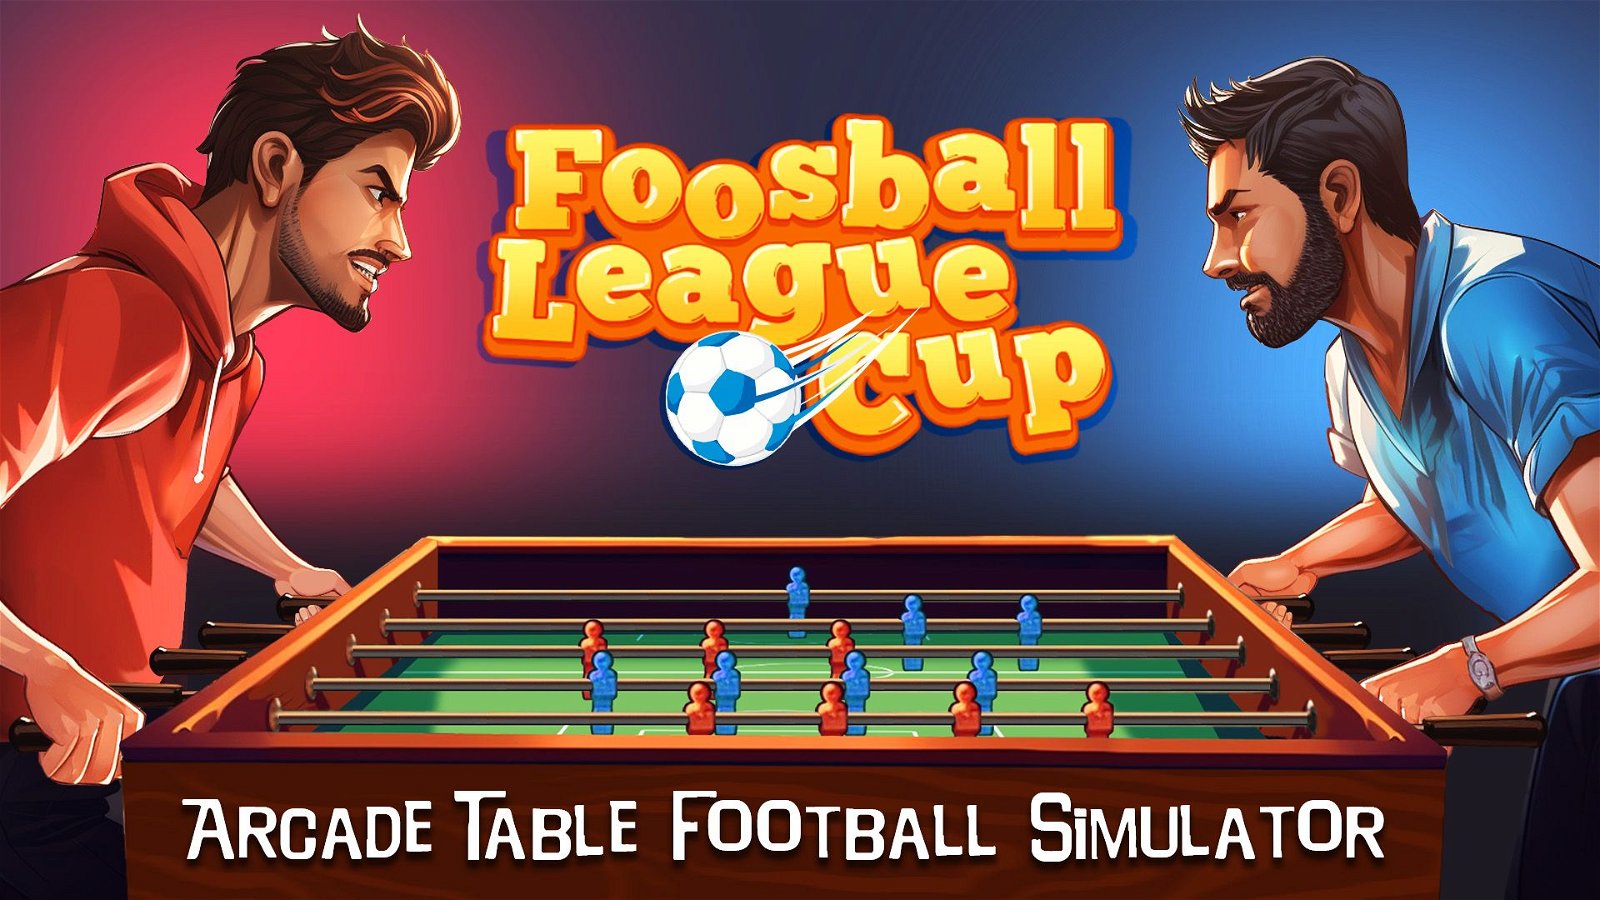 Image of Foosball League Cup: Arcade Table Football Simulator